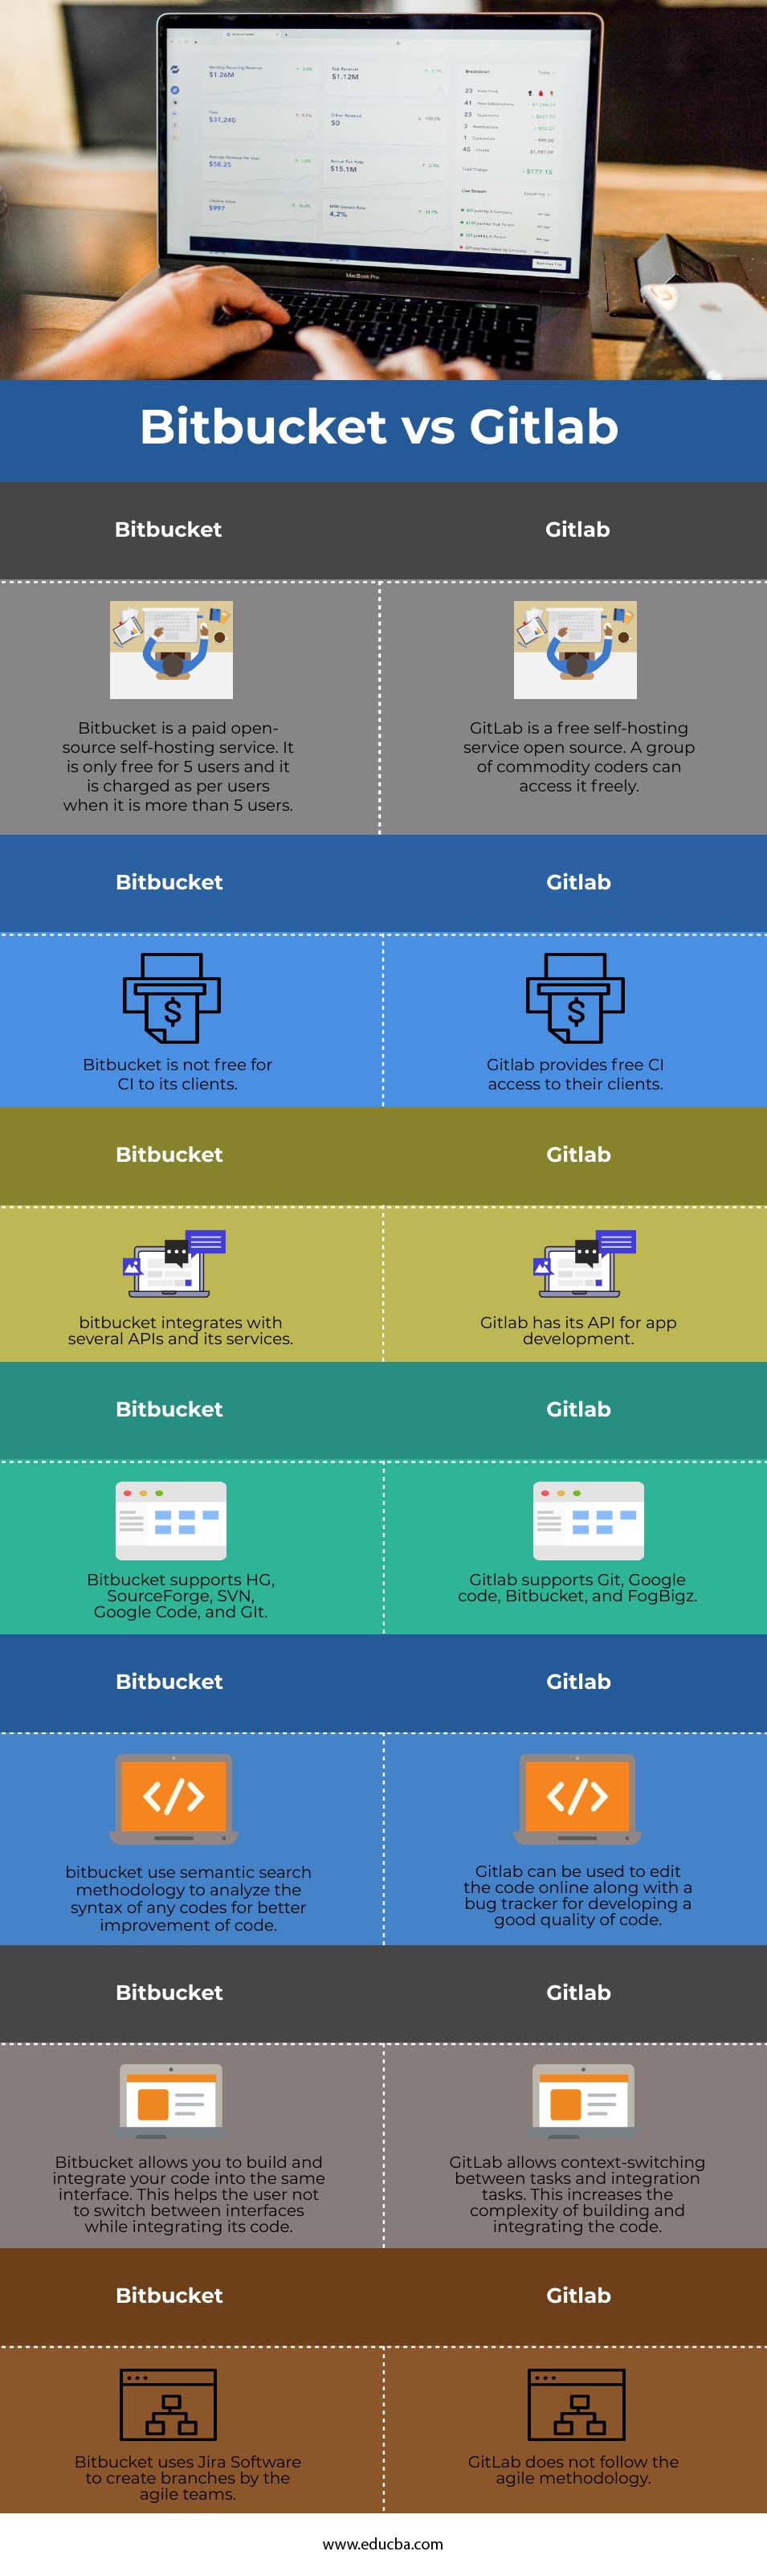 Bitbucket vs Gitlab info